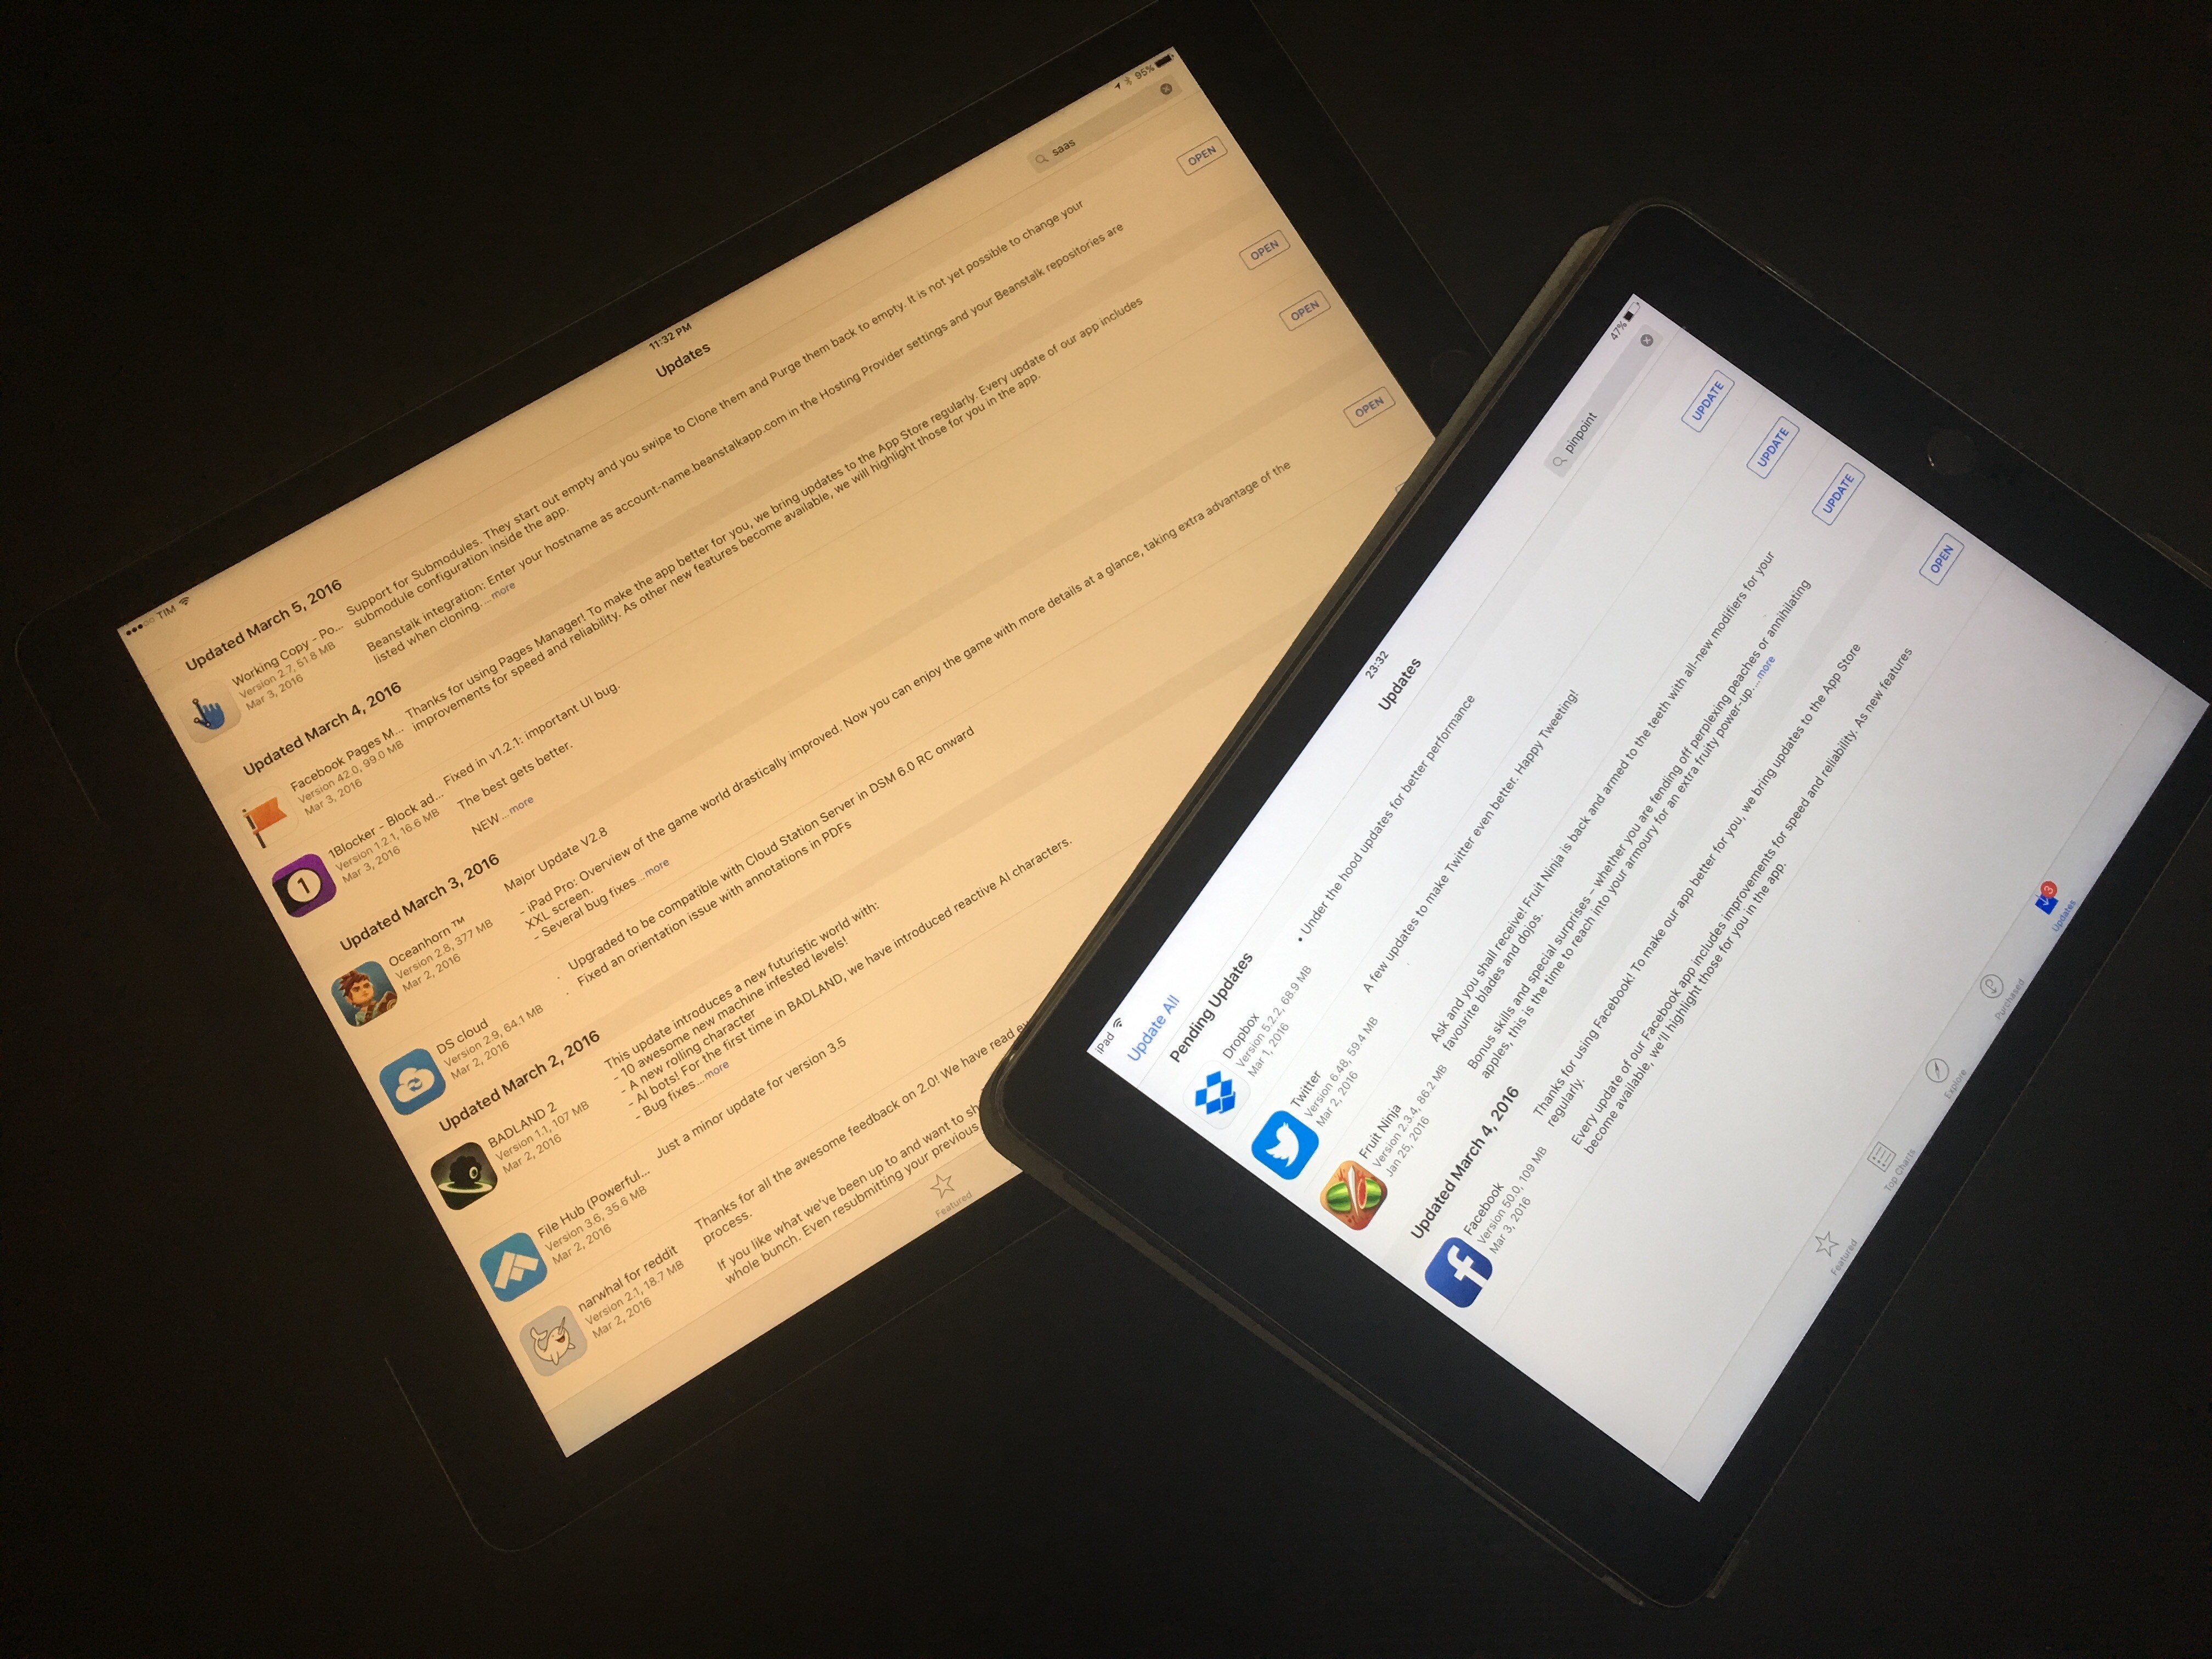 Night Shift on an iPad Pro vs. iOS 9.2 on an iPad Air 2.